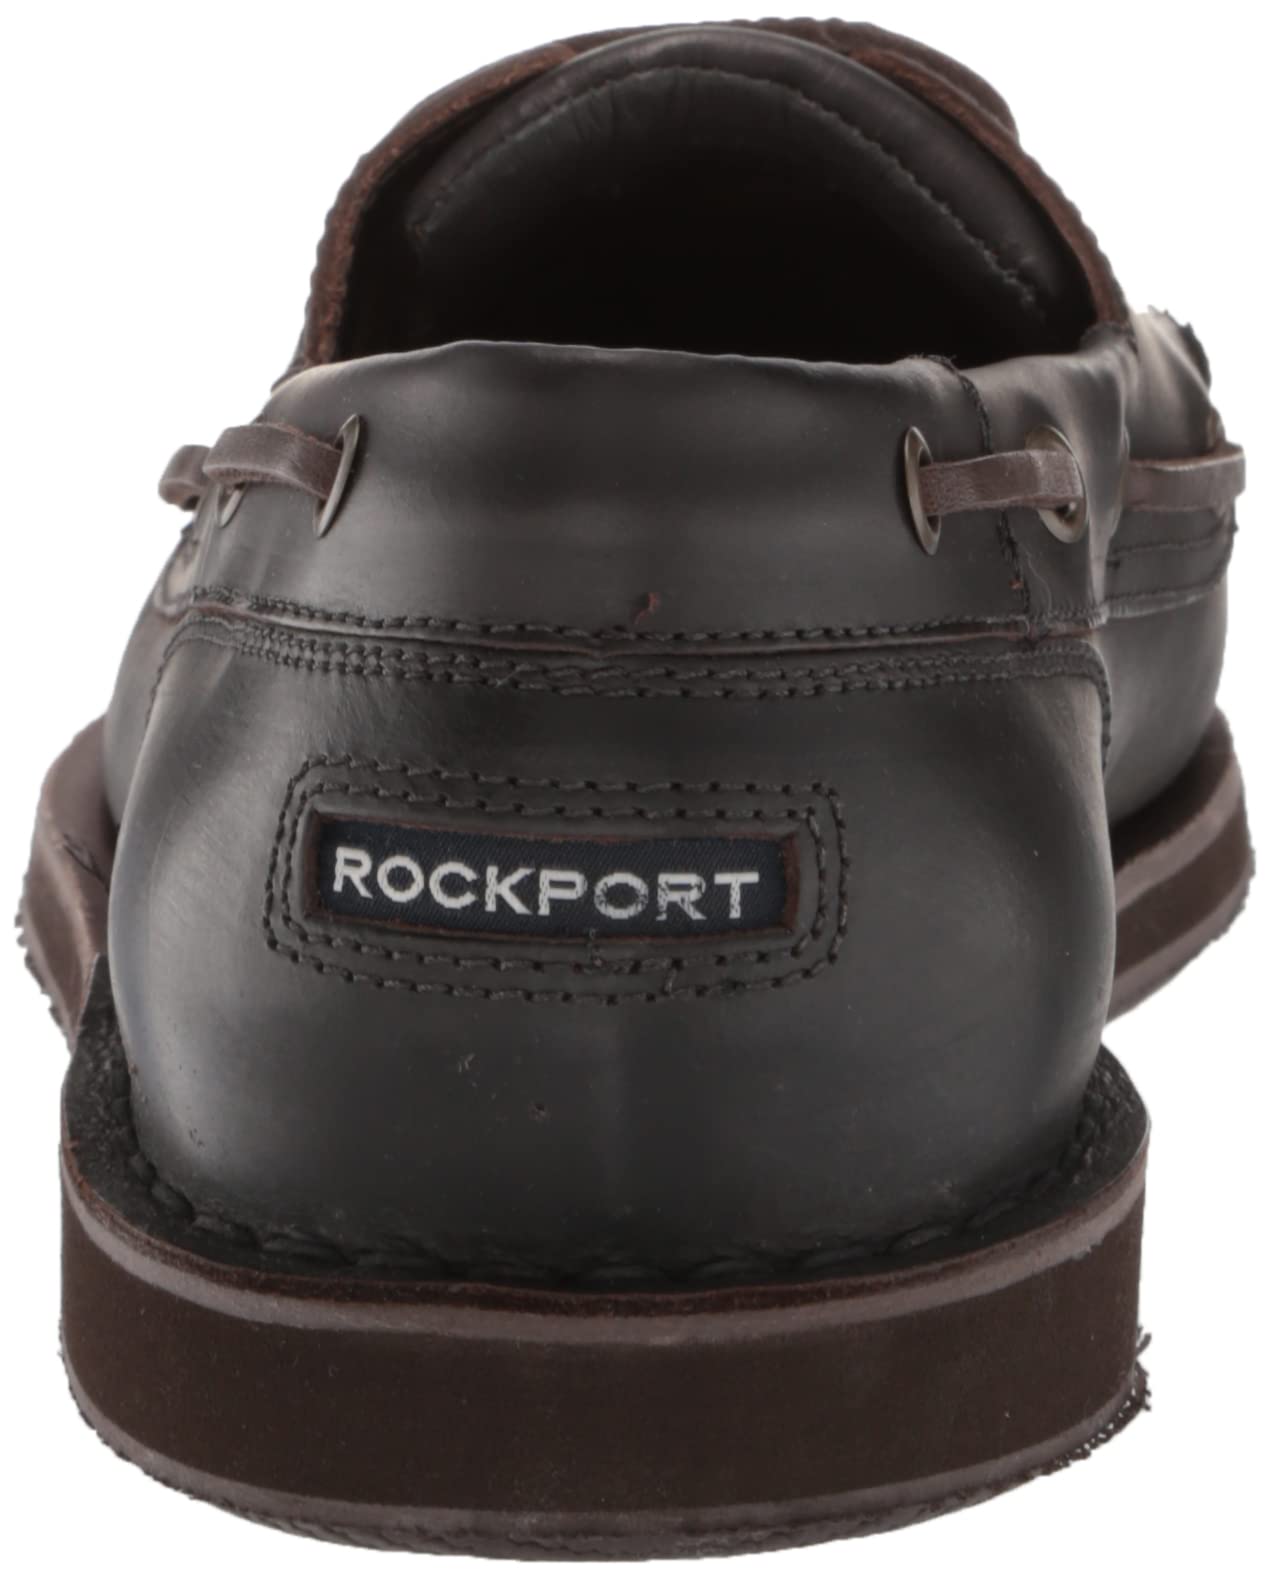 Rockport Men's Perth Boat Shoe, Dark Brown Pull Up, 9 X-Wide